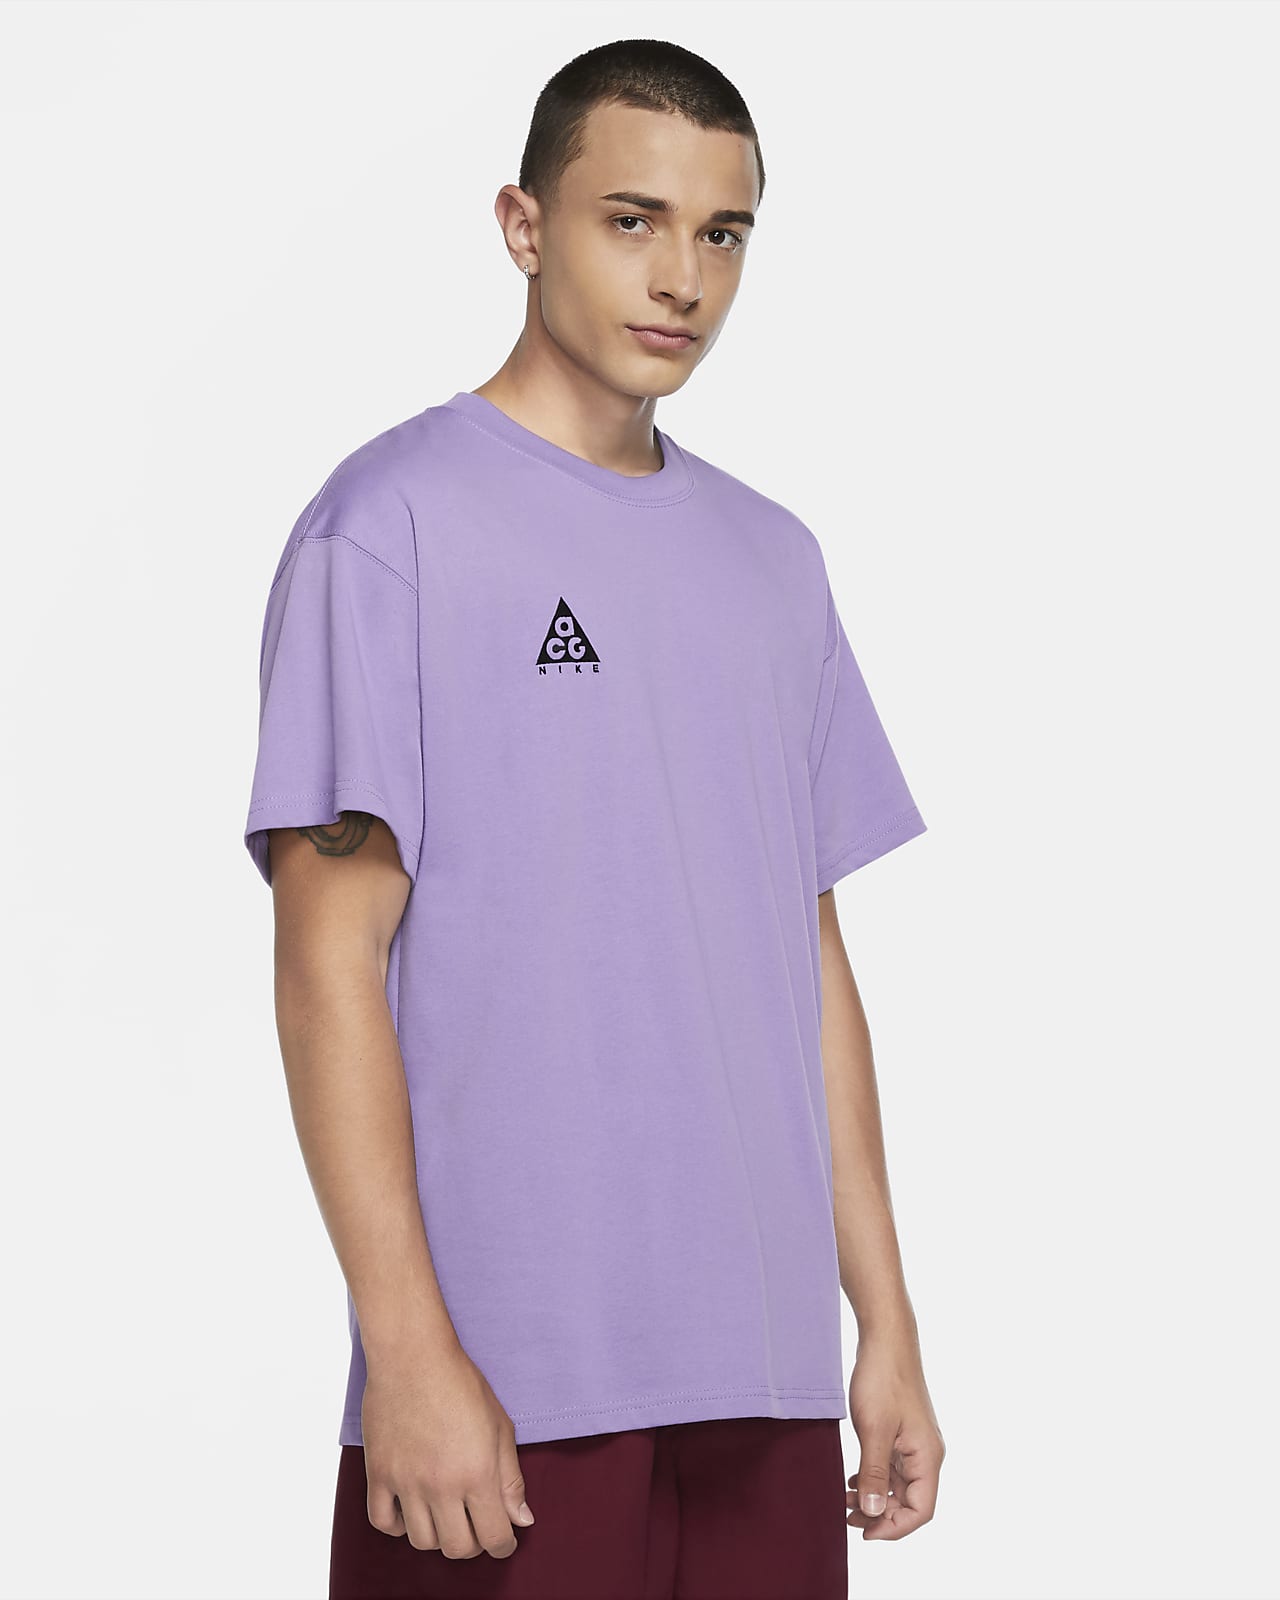 nike violet shirt